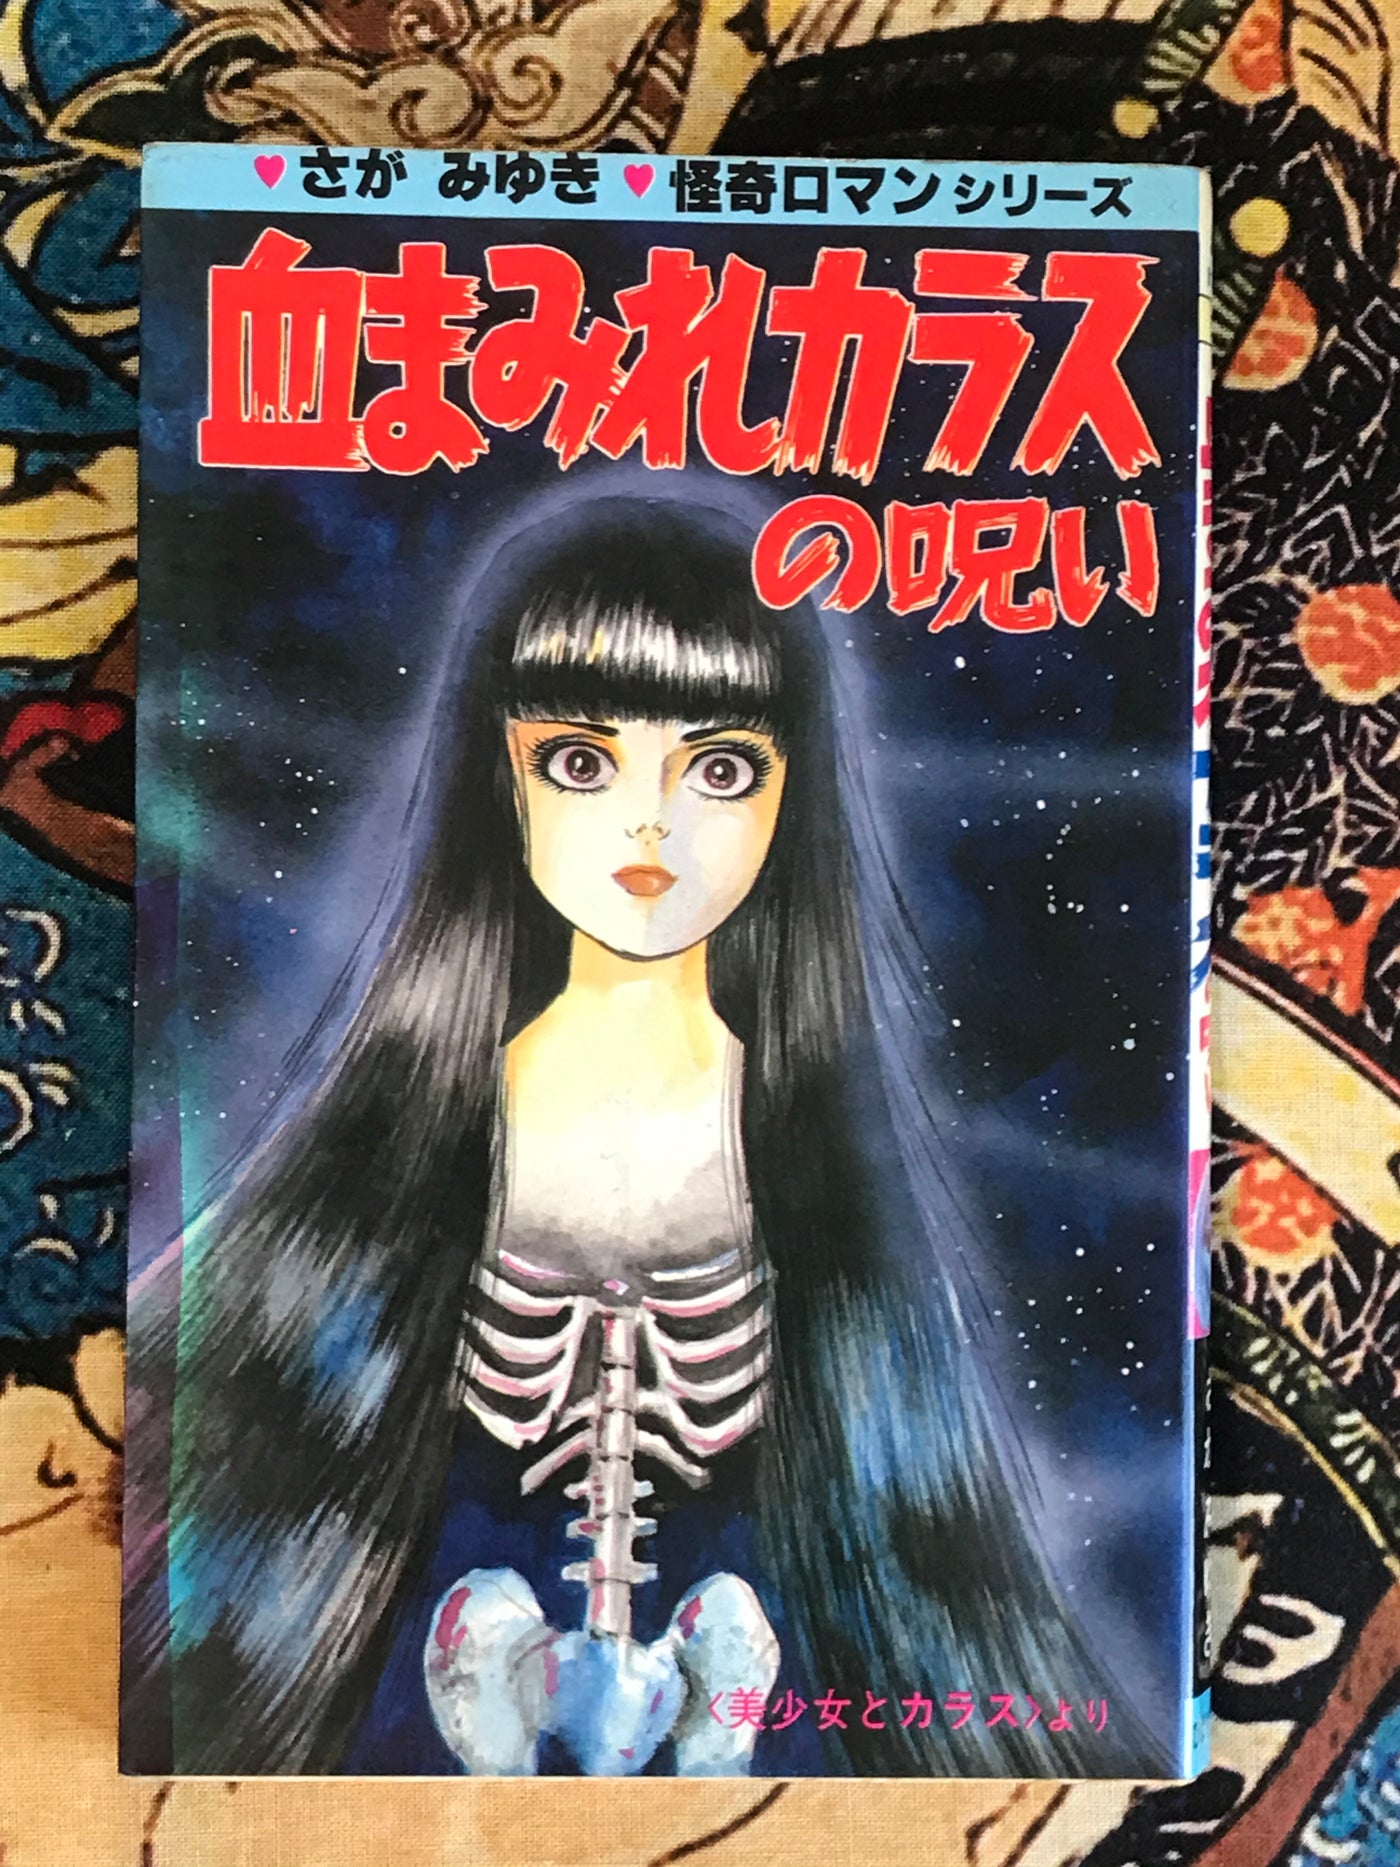 Curse of the Bloody Crow by Miyuki Saga (1983)